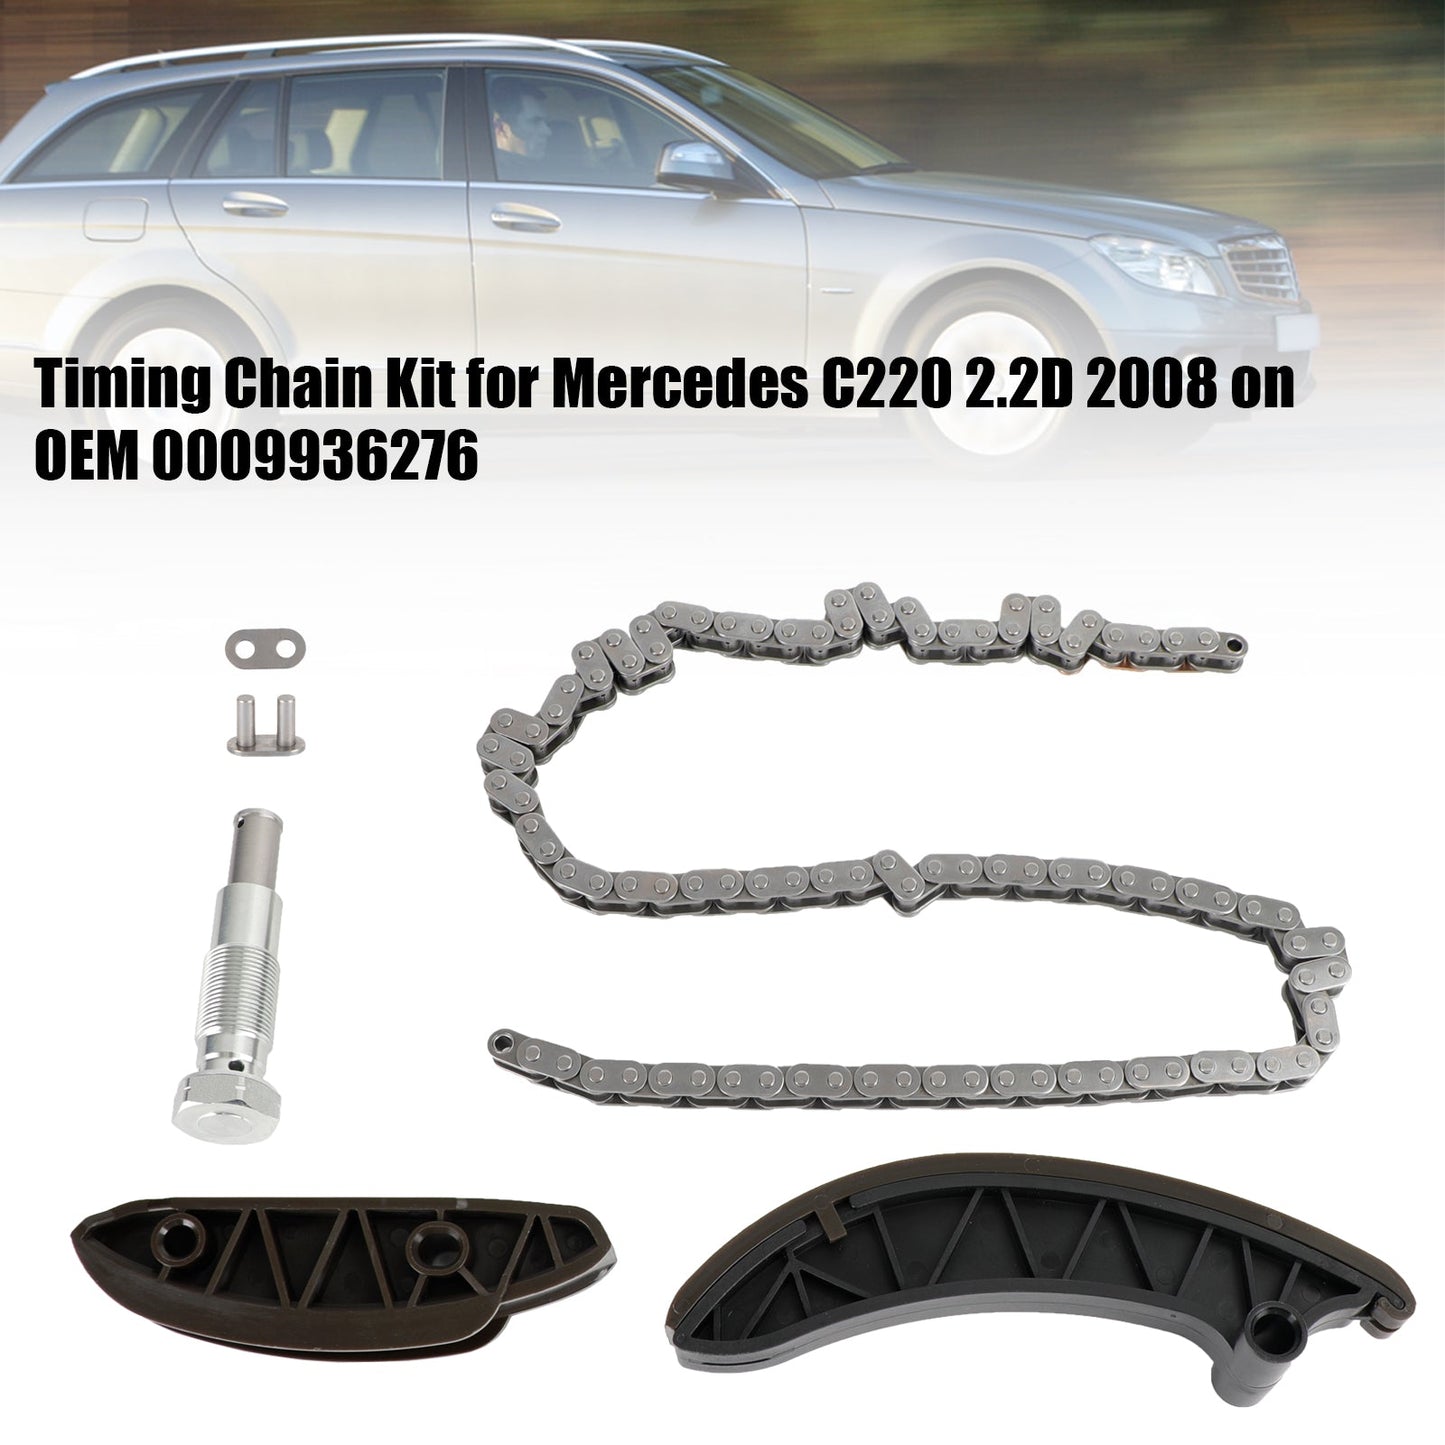 Timing Chain Kit for Mercedes C220 2.2D 2008 on OM651.911 0009936276